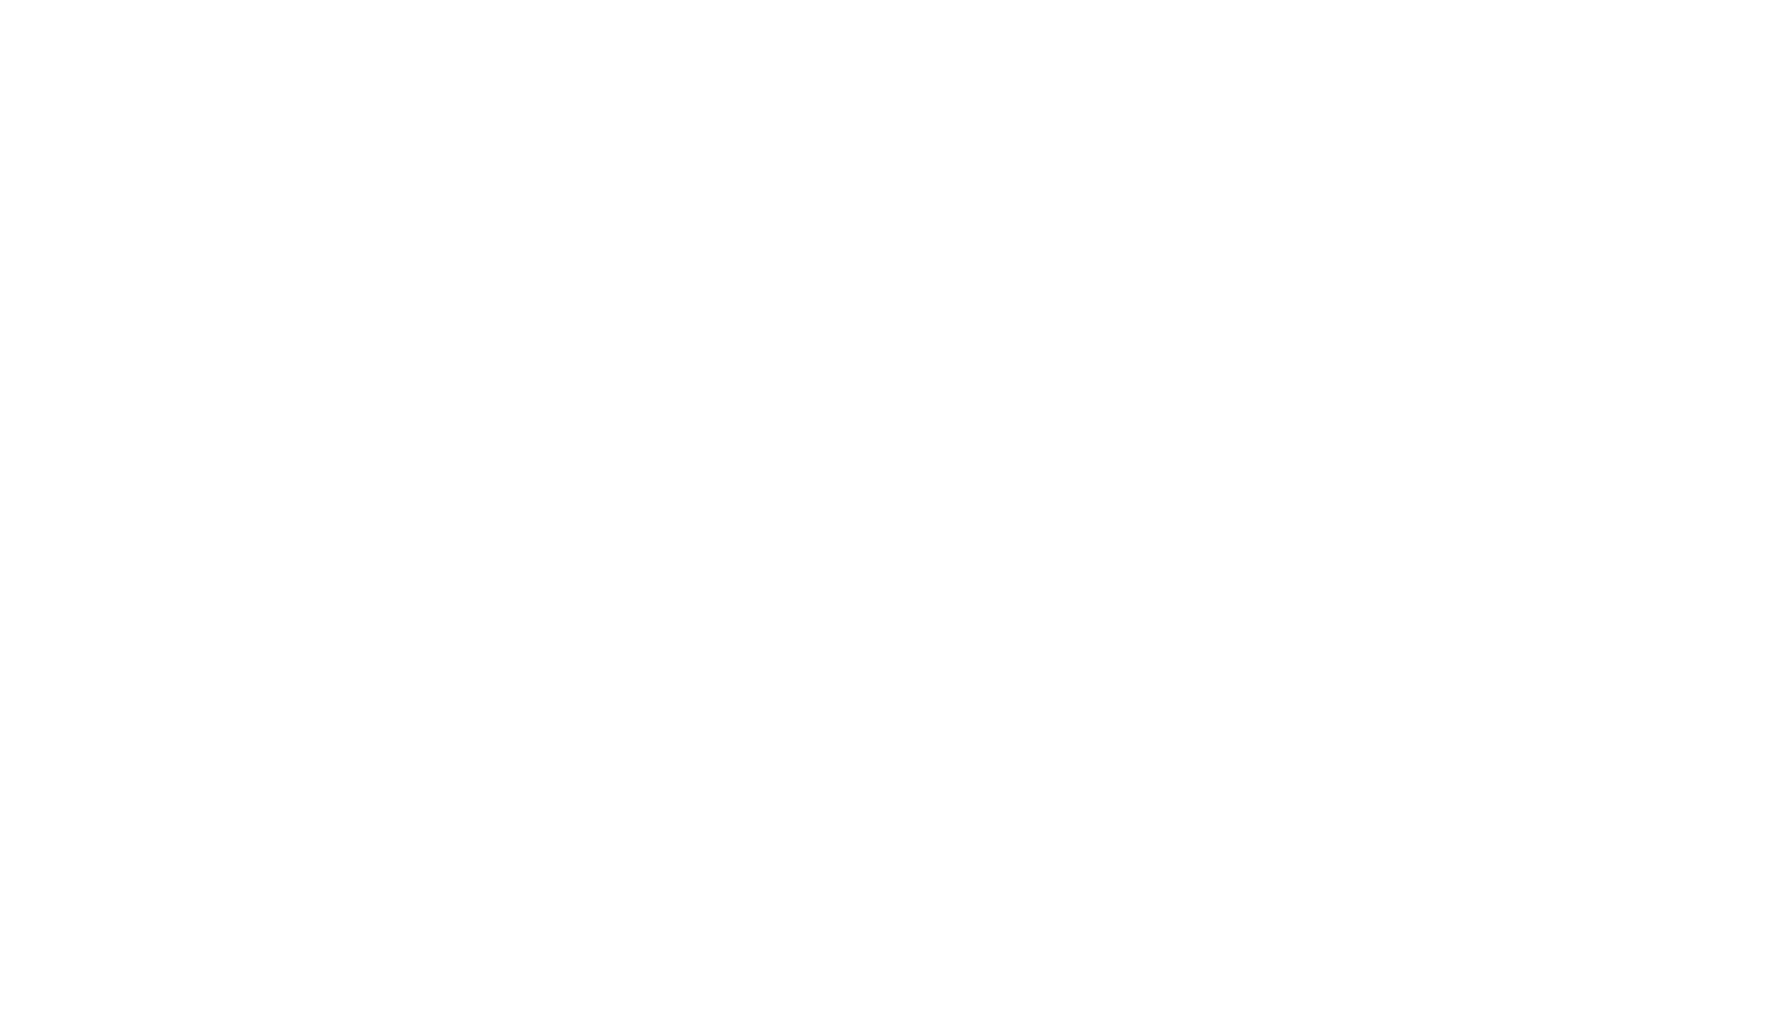 Flight Photos Reverse White